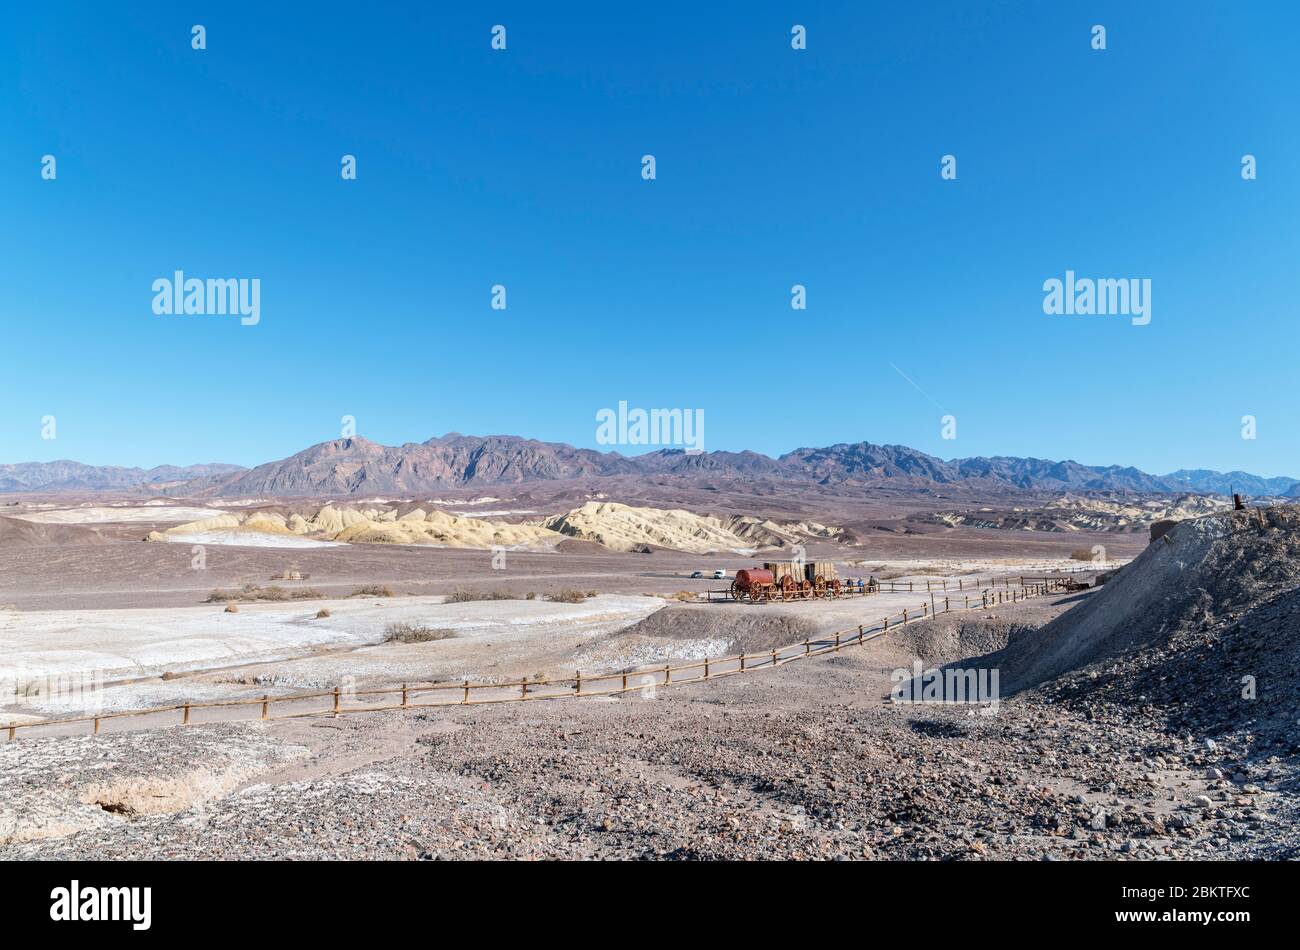 'Twenty mule team' borax wagons, Harmony Borax Works, Furnace Creek, Death Valley National Park, California, USA Stock Photo